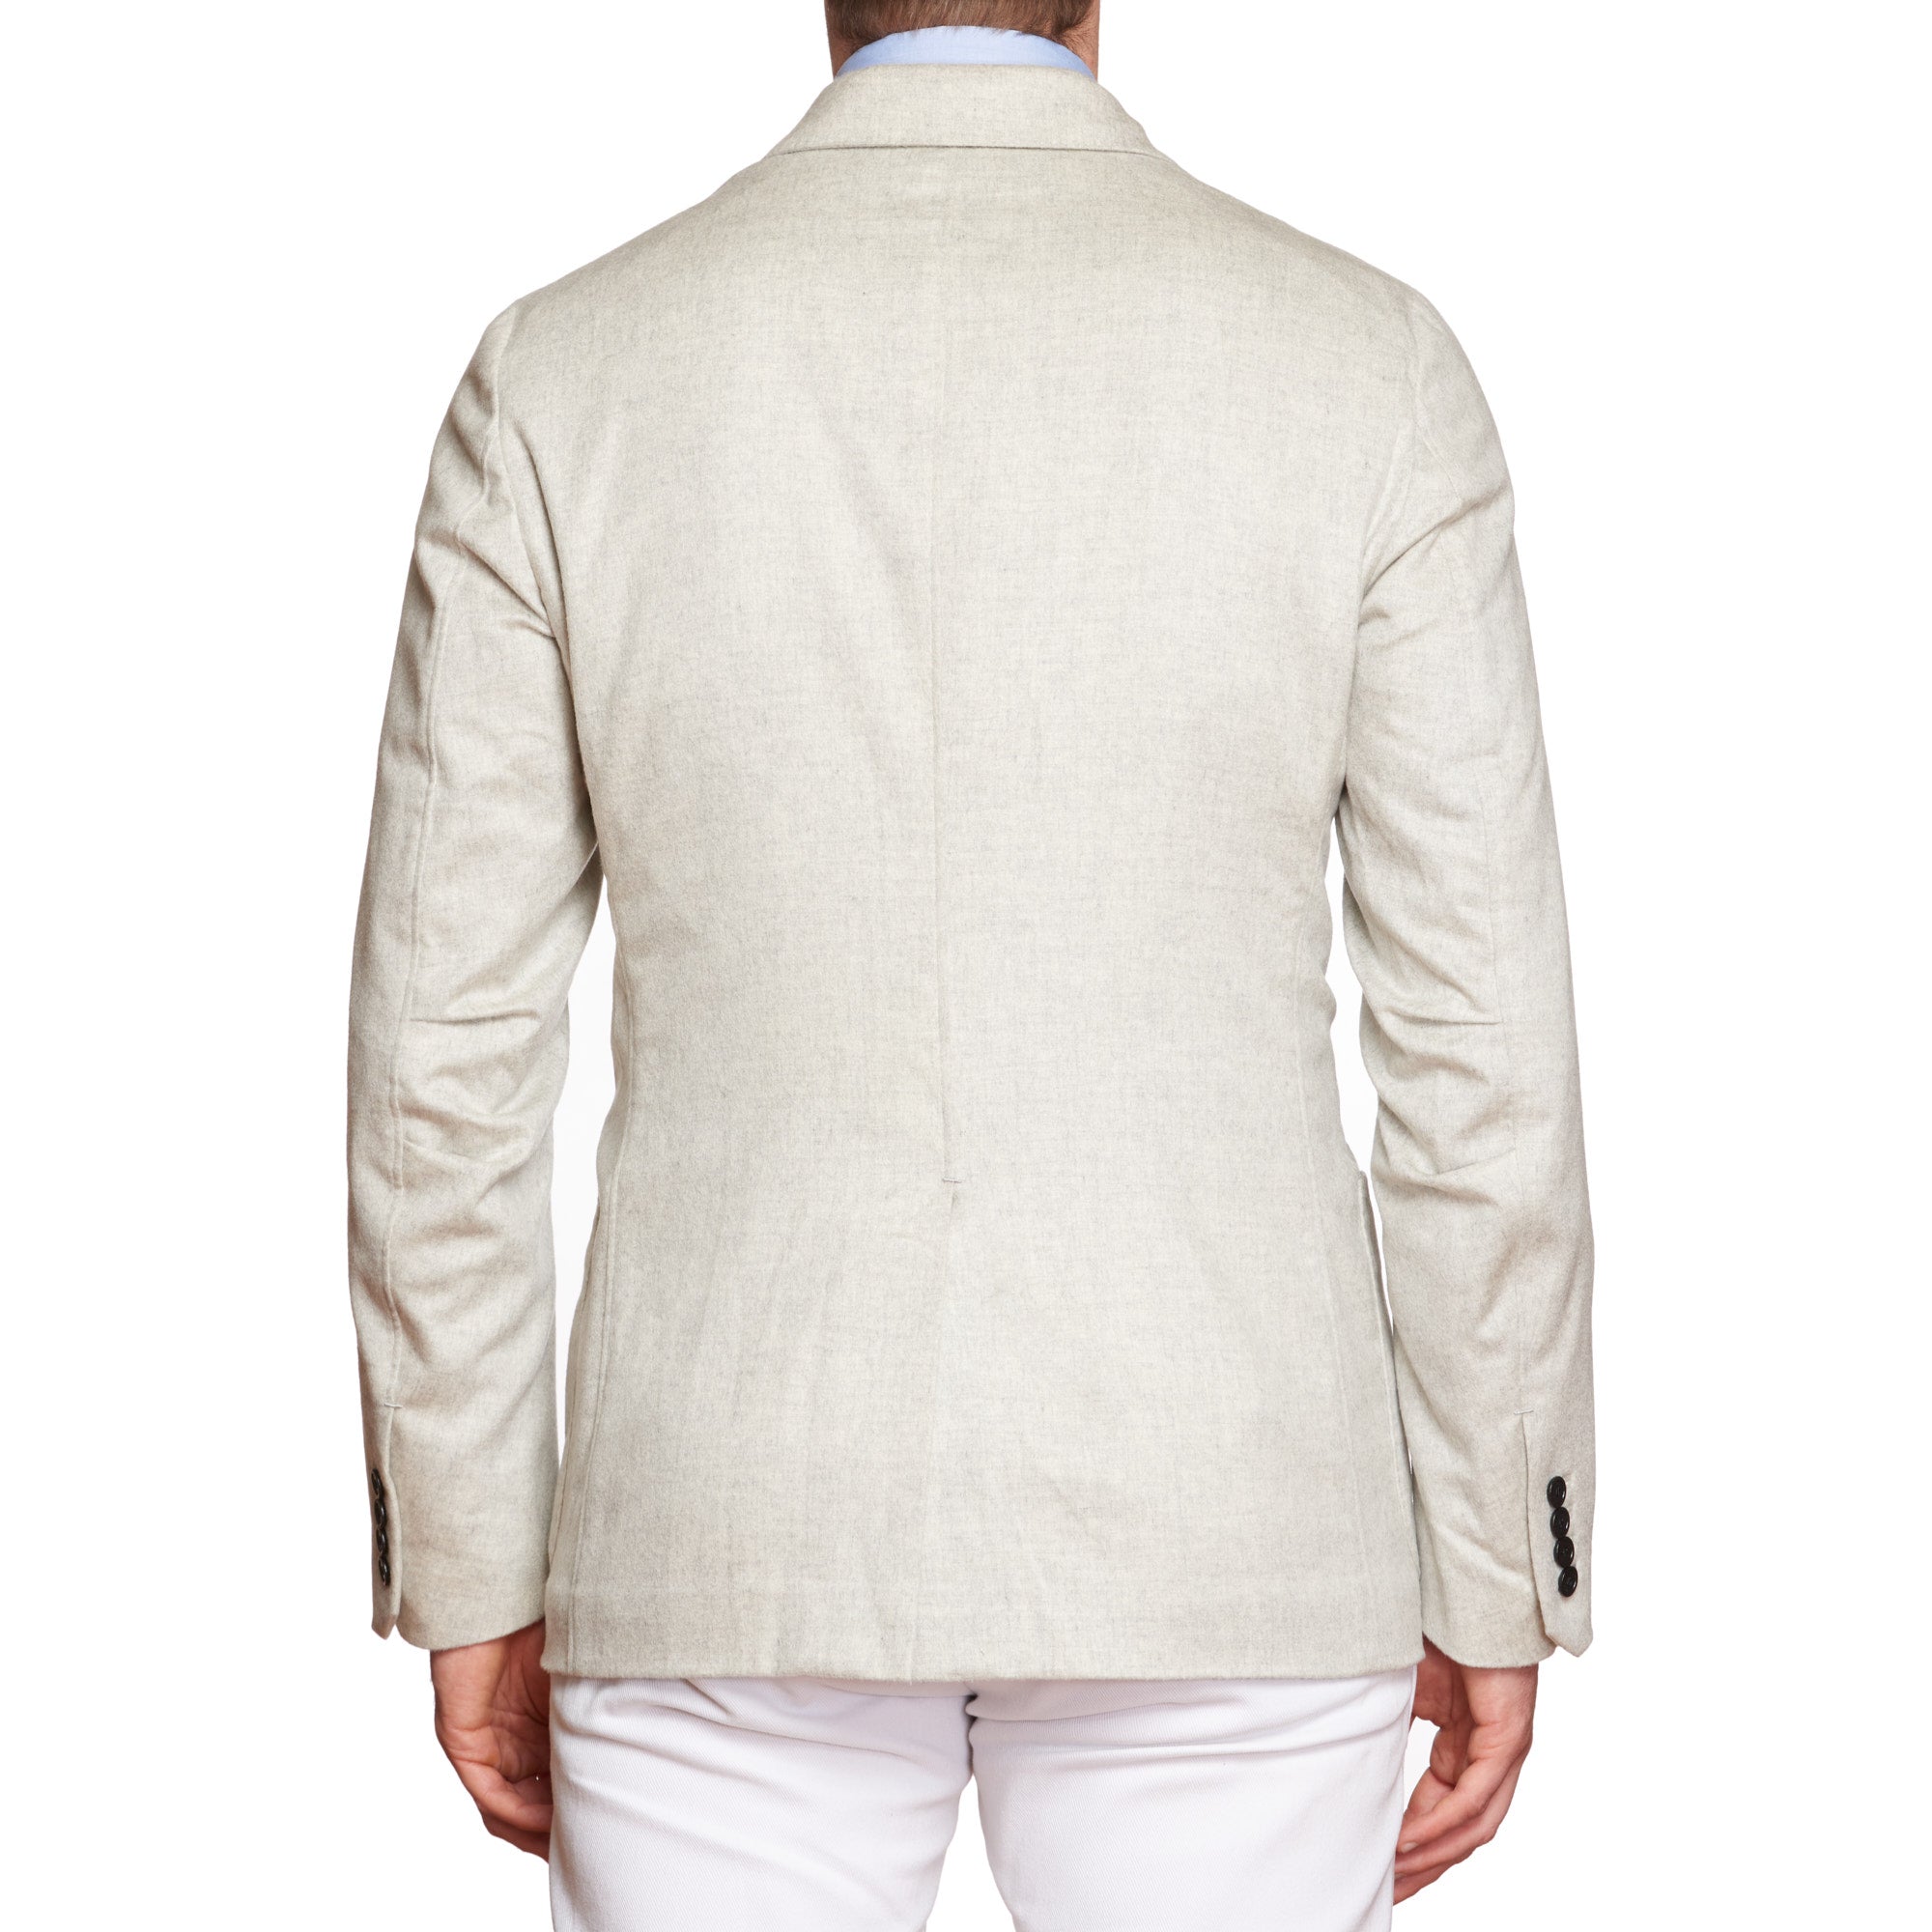 BERLUTI Paris Melange Light Gray Cashmere Blazer Jacket Size R50 US 40 BERLUTI